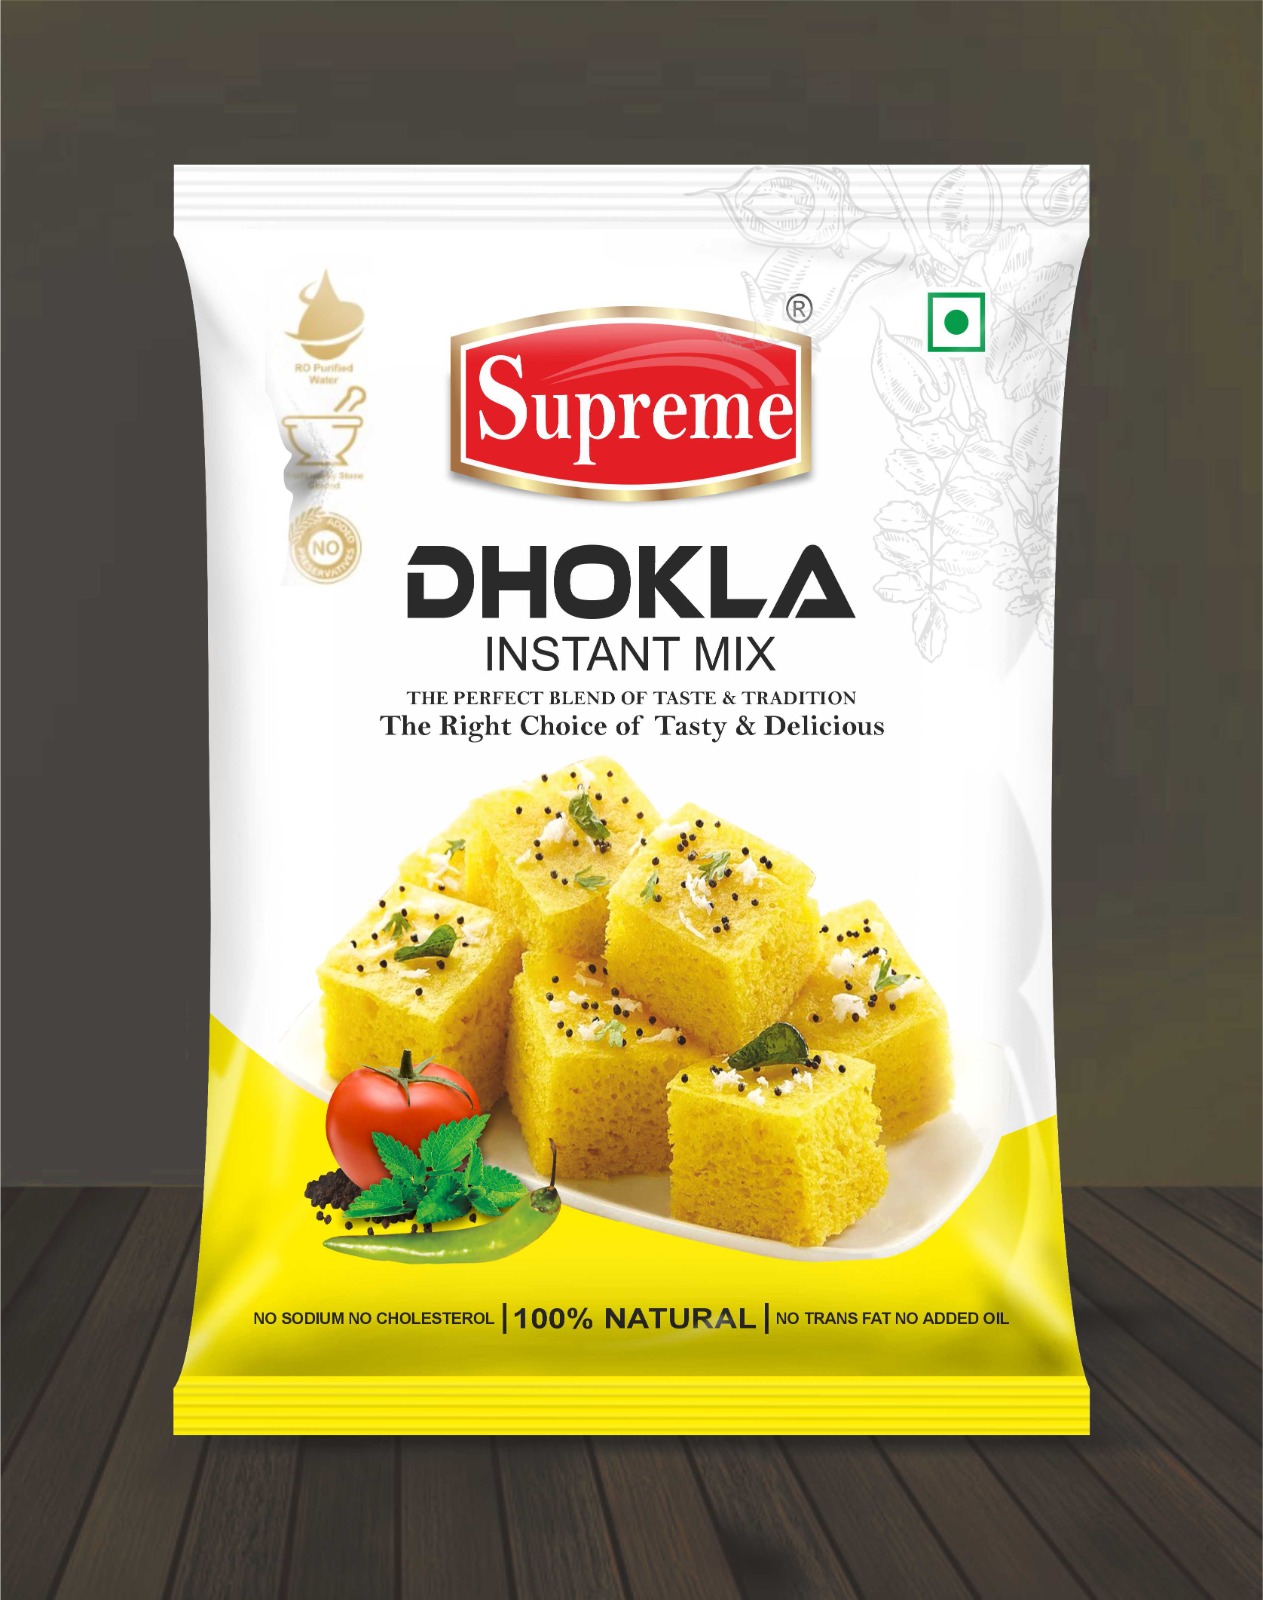 Supreme Instant Mix Dhokla